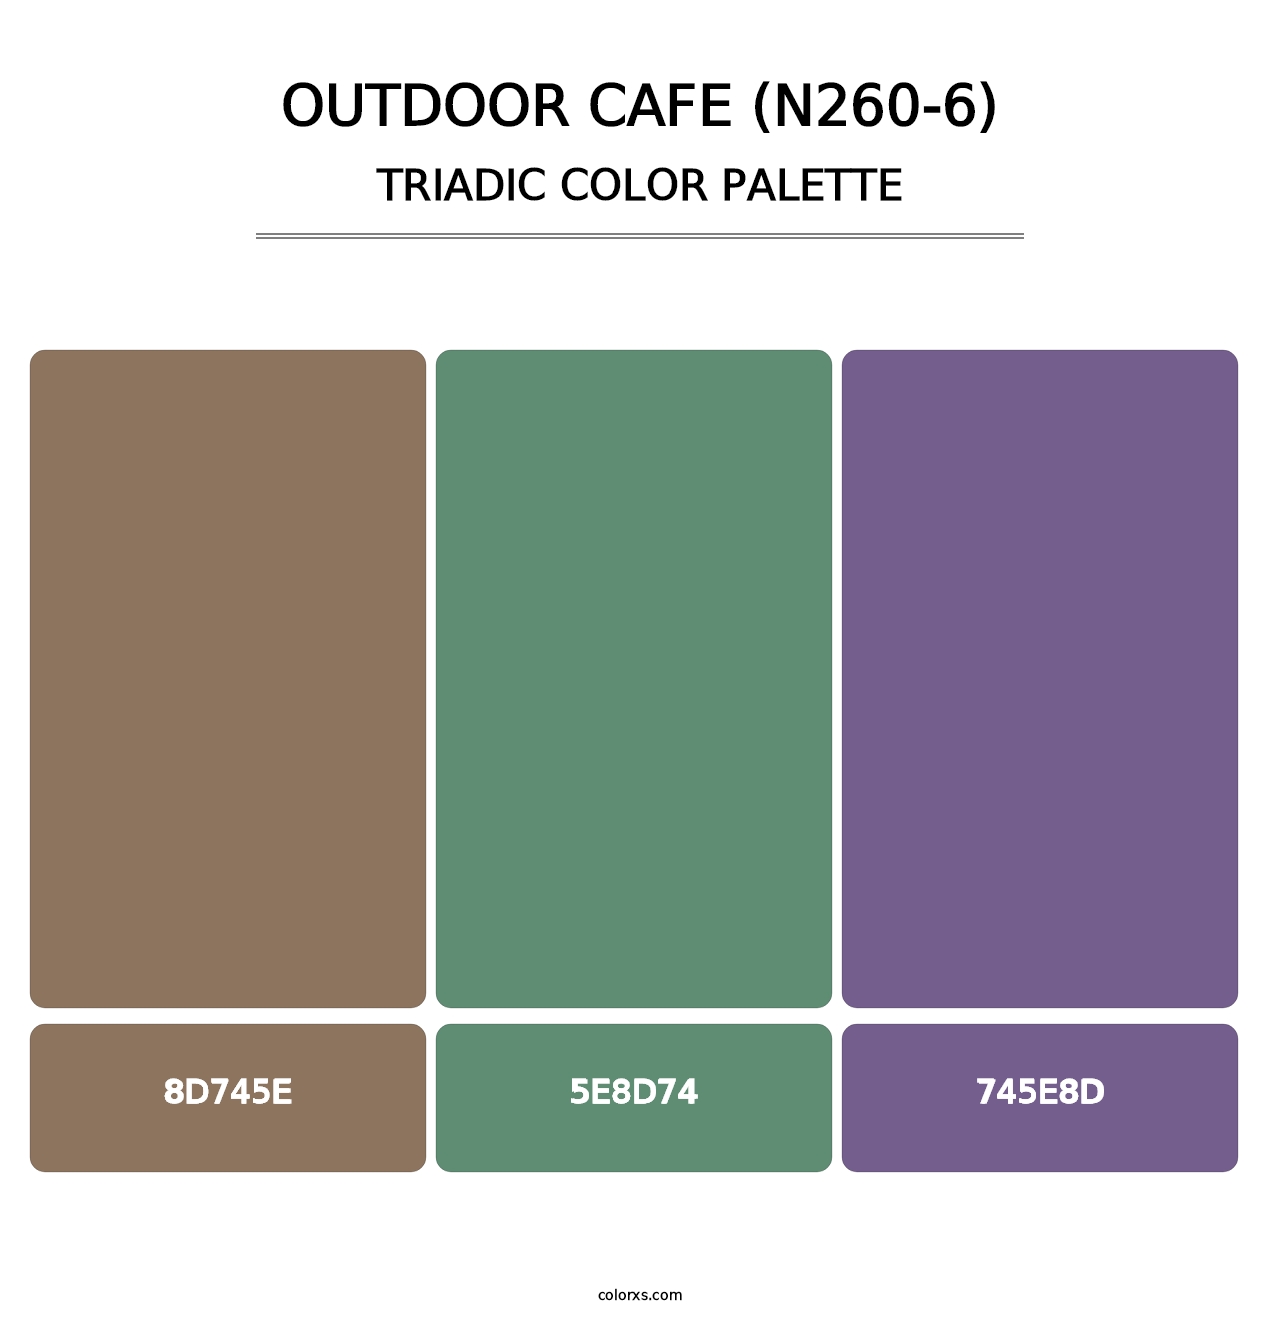 Outdoor Cafe (N260-6) - Triadic Color Palette